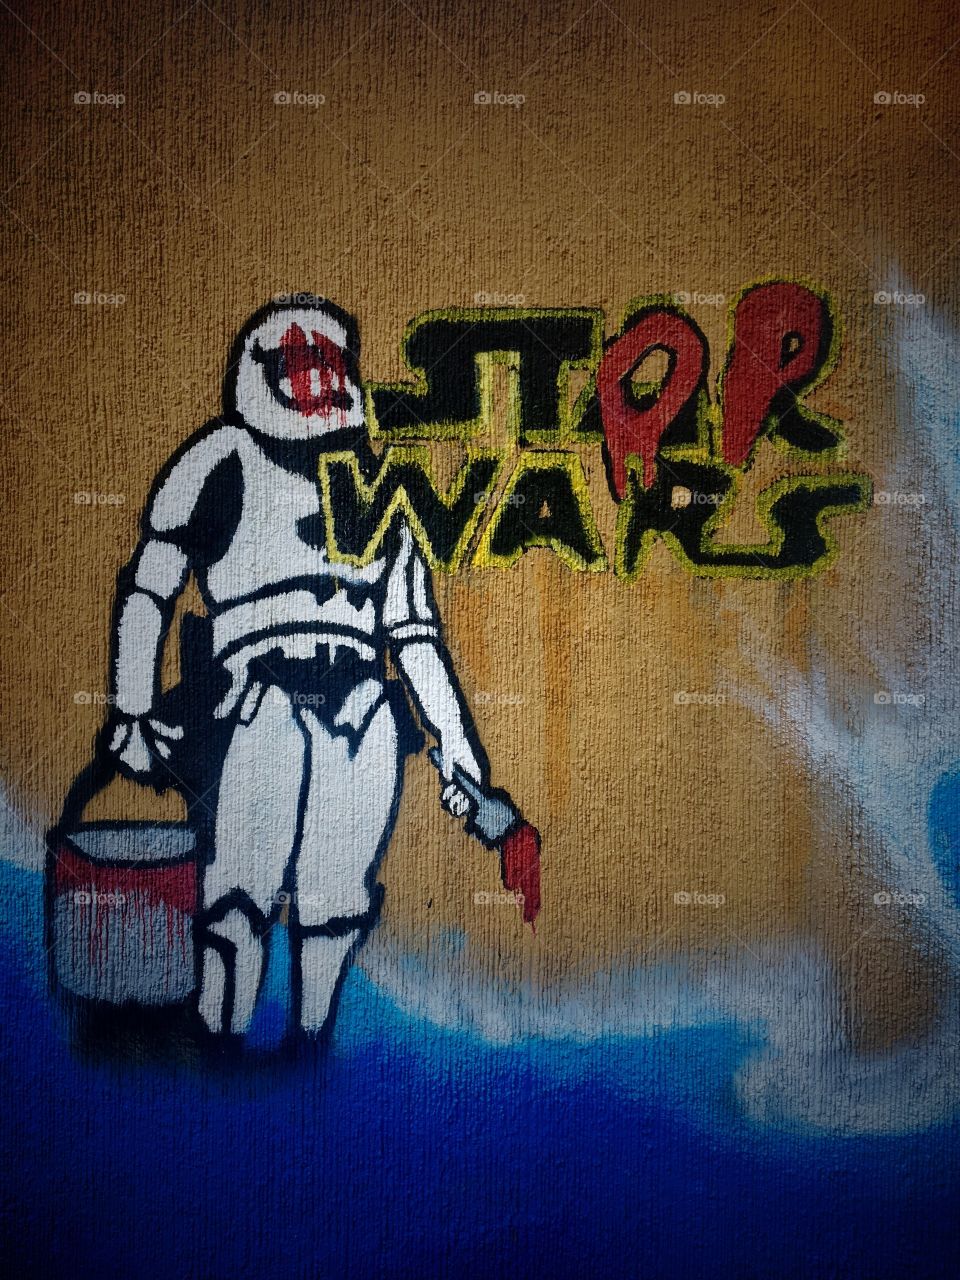 Stop wars / Star Wars, revolution, rebel